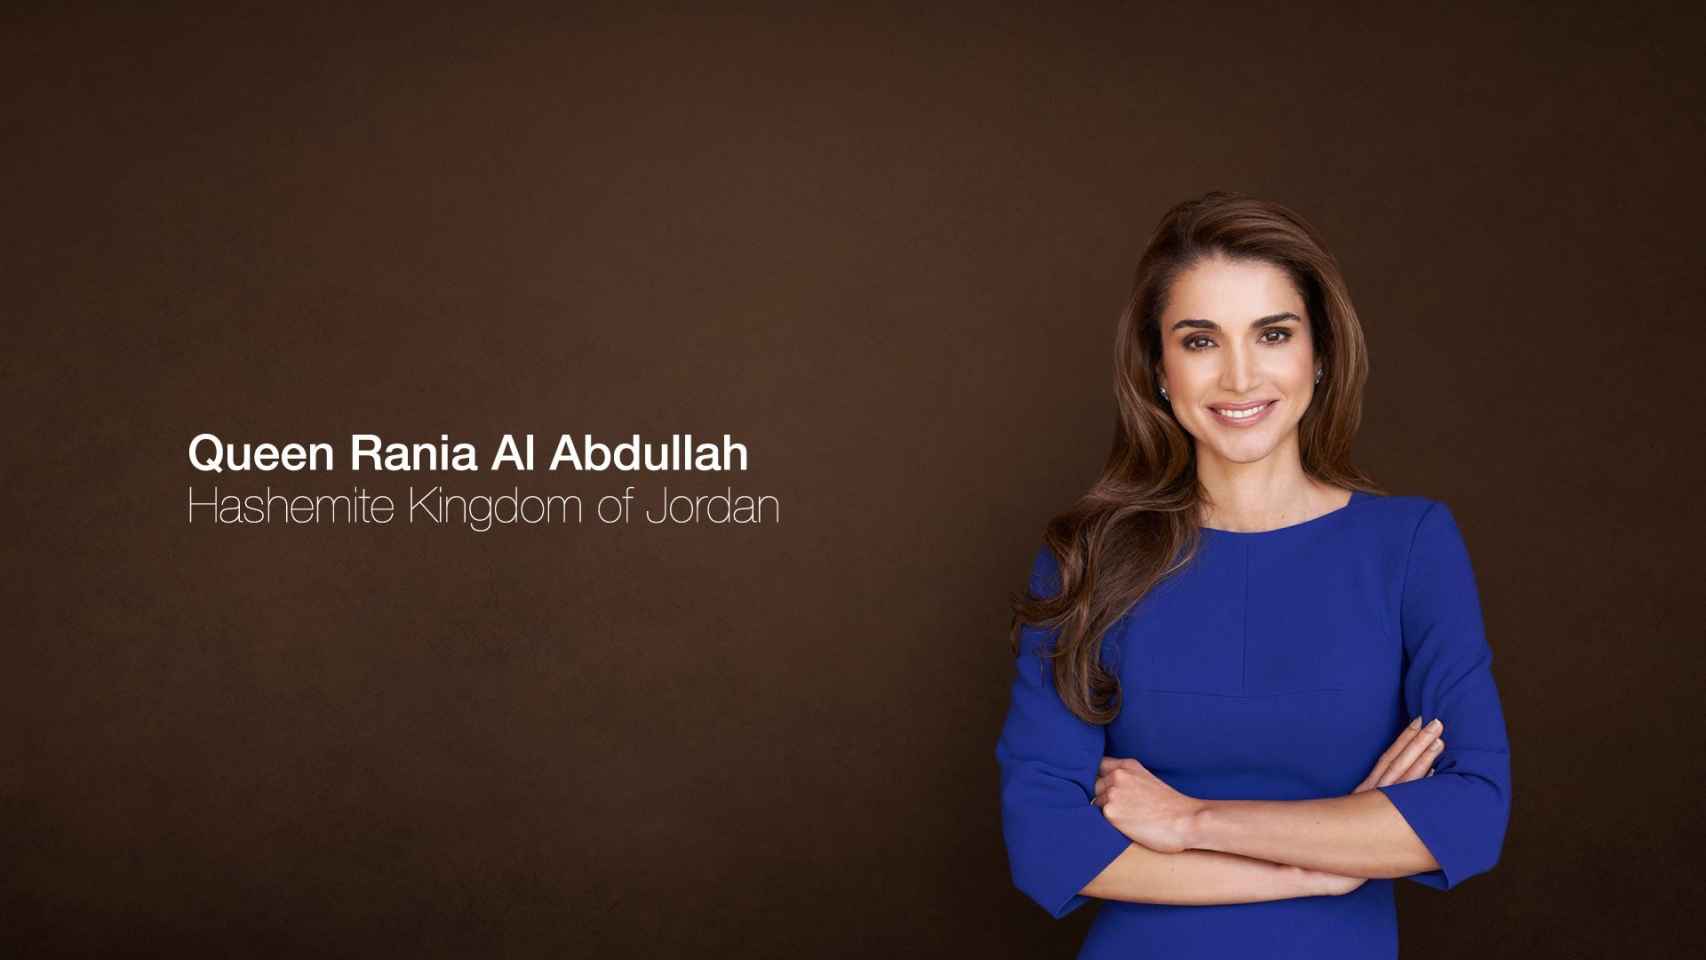 Portada de página web oficial de la reina Rania de Jordania.